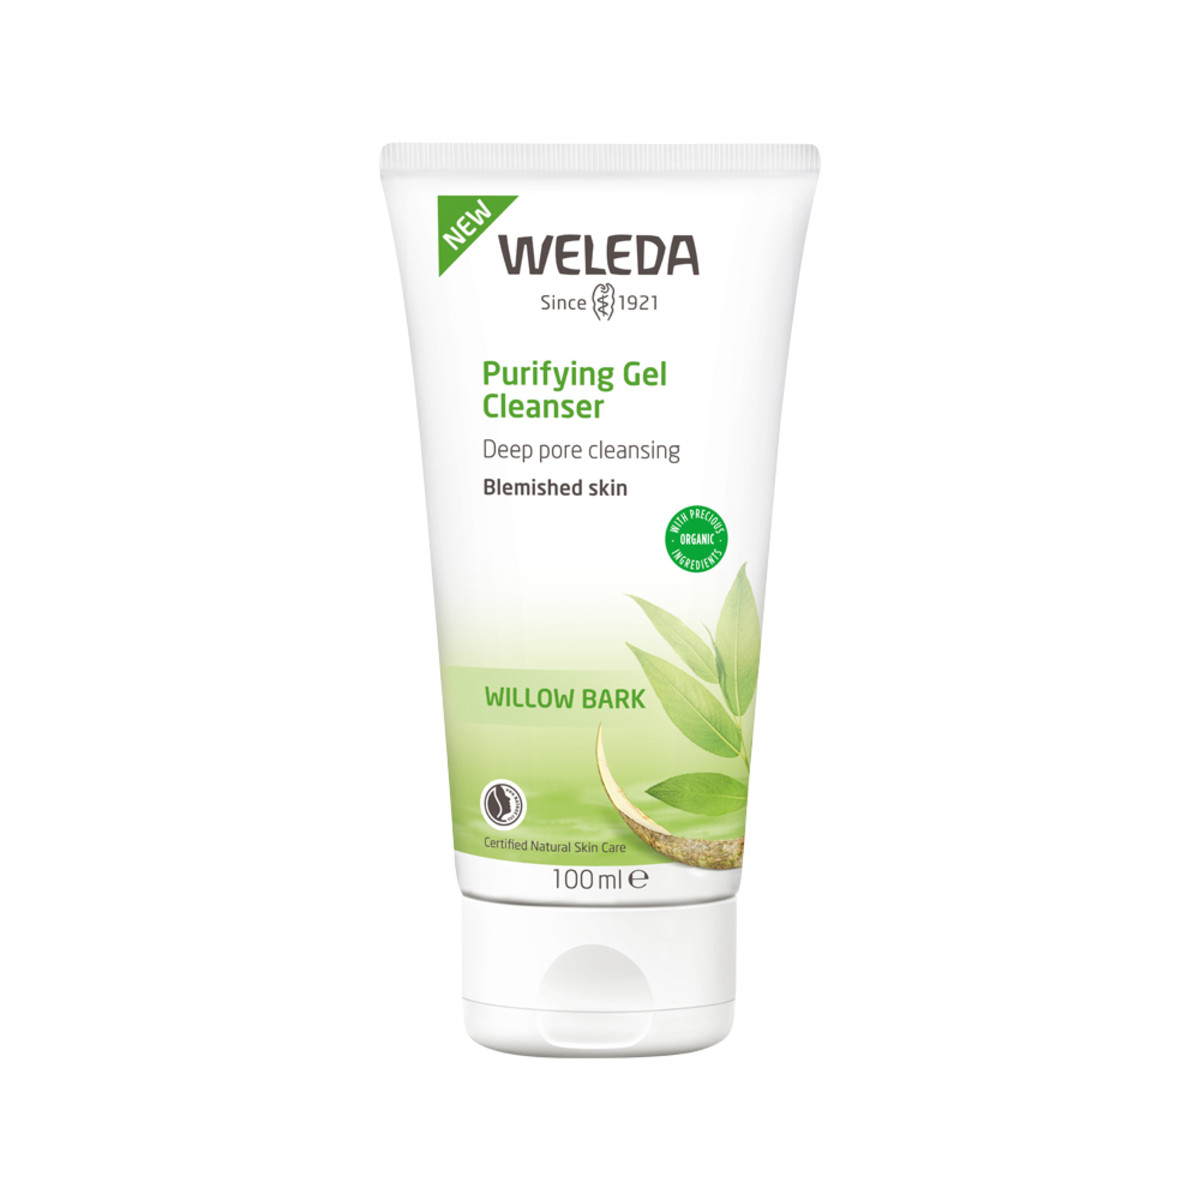 WELEDA - Purify Gel Cleanser Willow Bark (Deep Pore Cleansing - Blemished Skin)